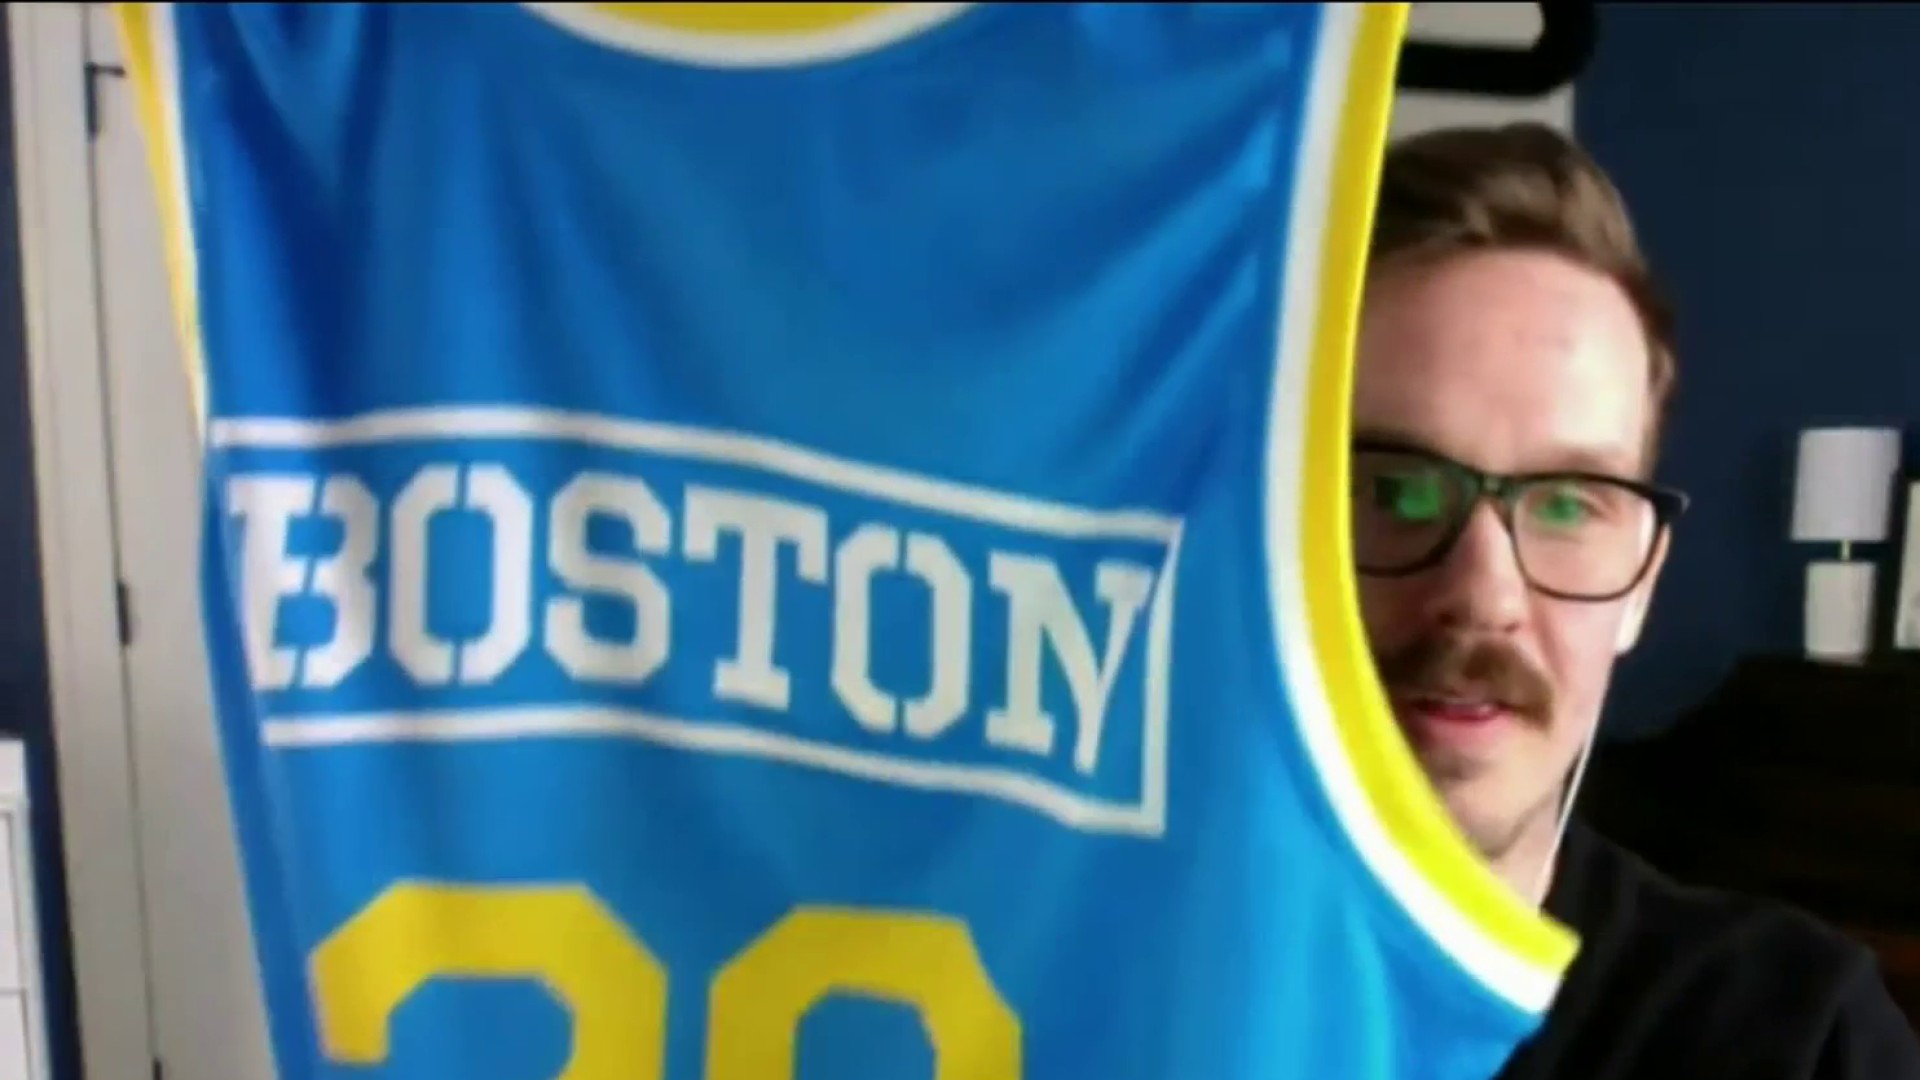 yellow and blue boston jersey